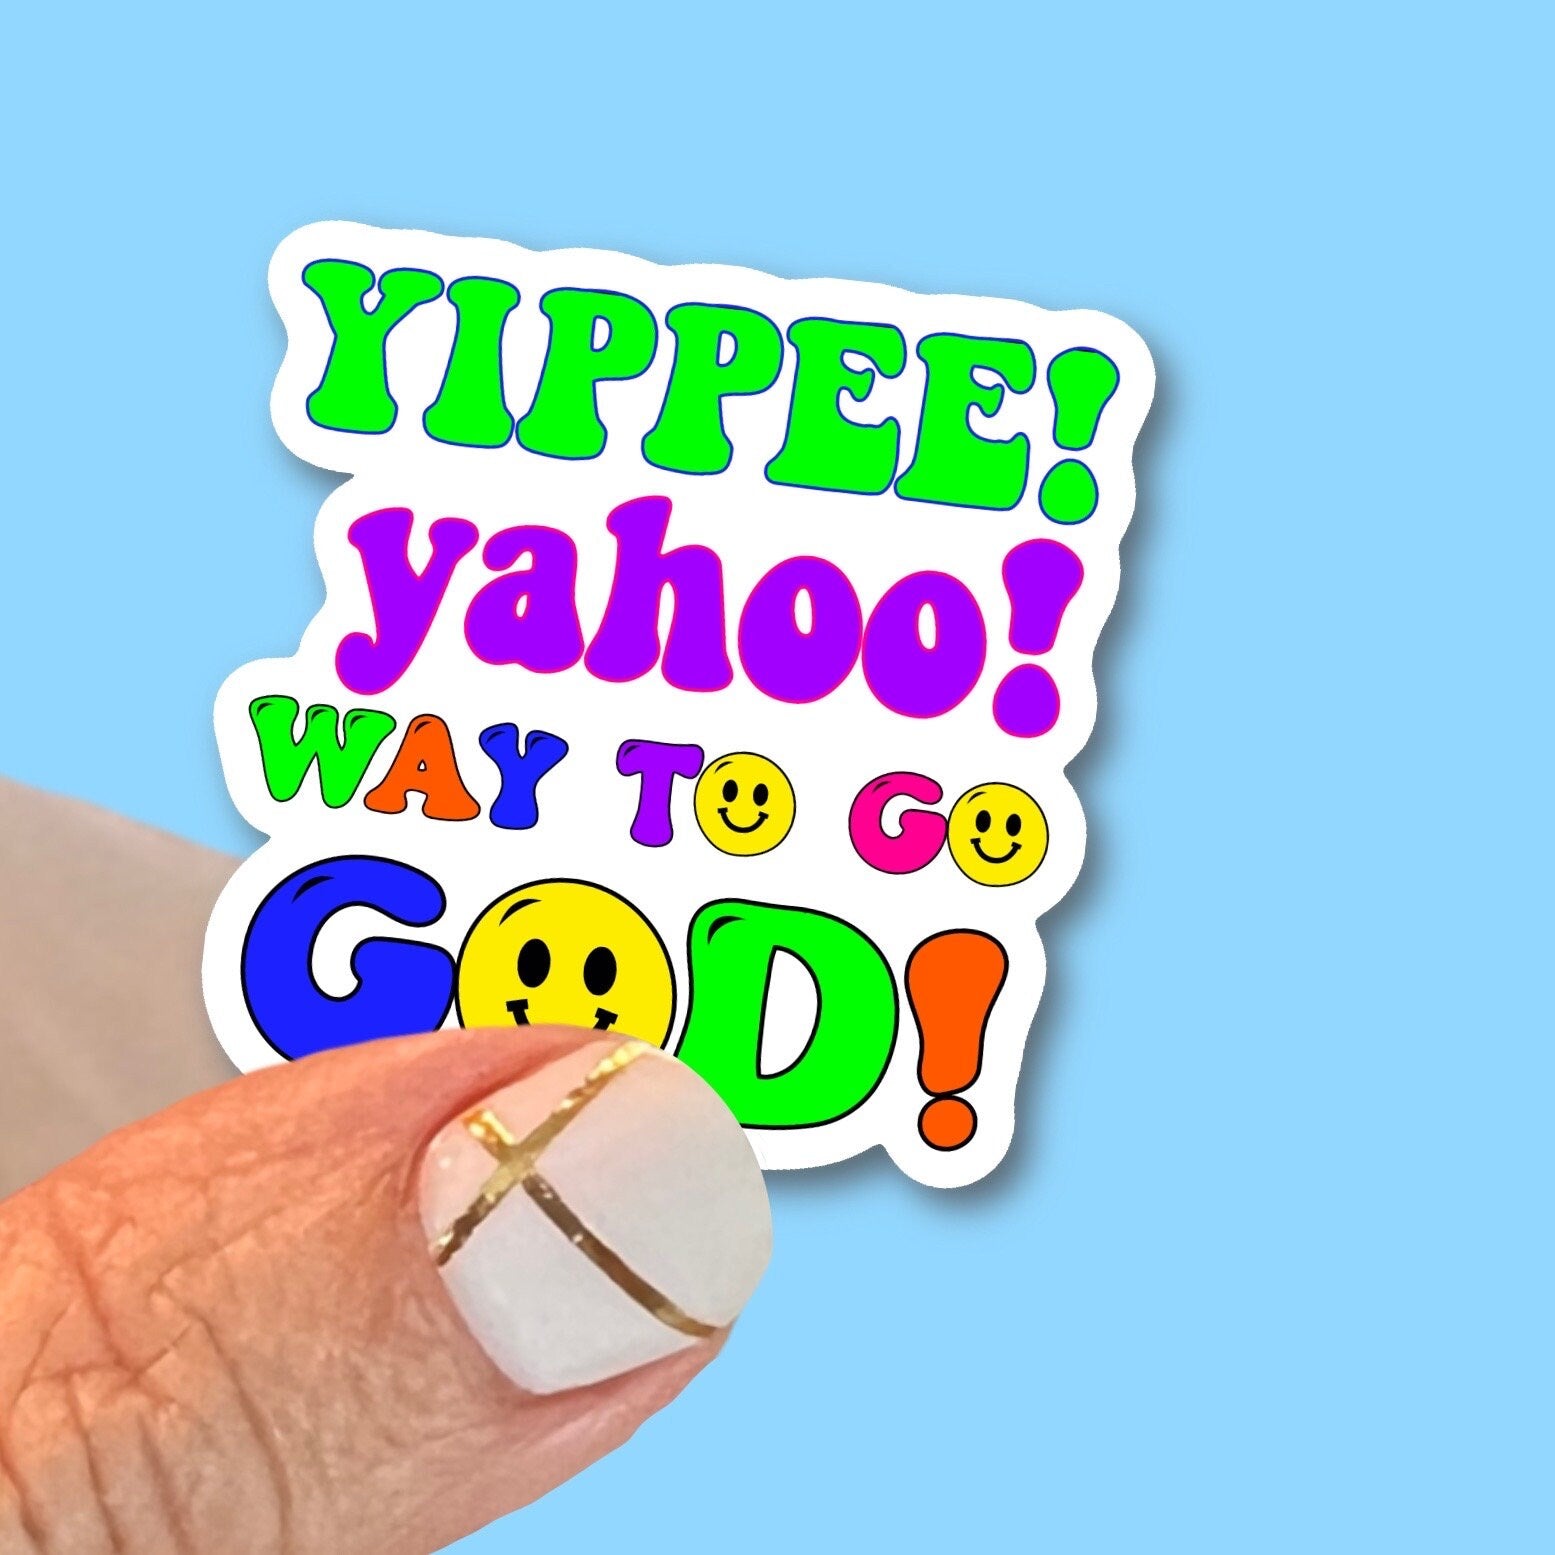 Yippee Yahoo Way to go God! - Christian Faith UV/ Waterproof Vinyl Sticker/ Decal- Choice of Size